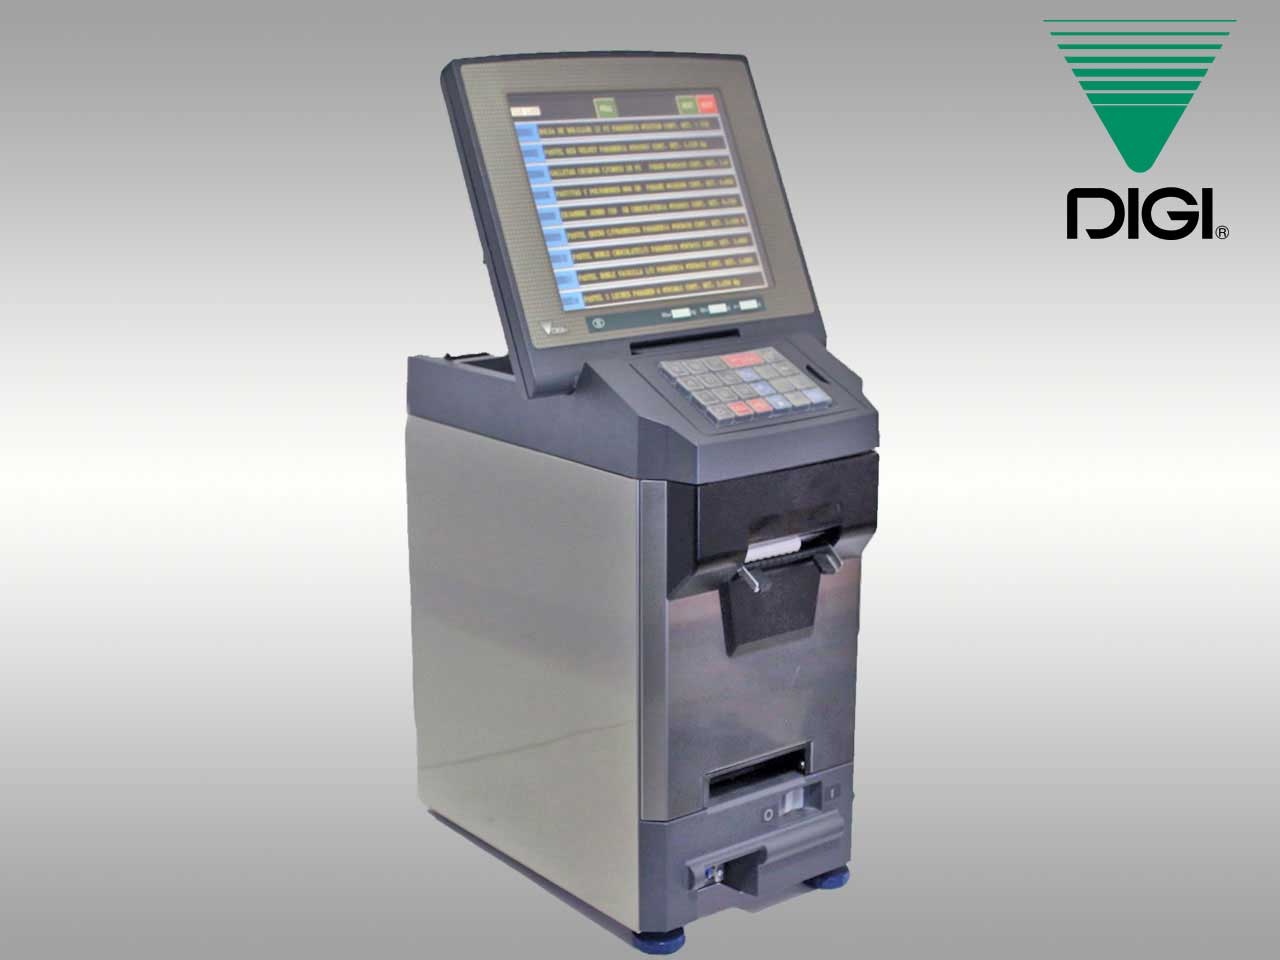 Impresora Digi DPS-4600